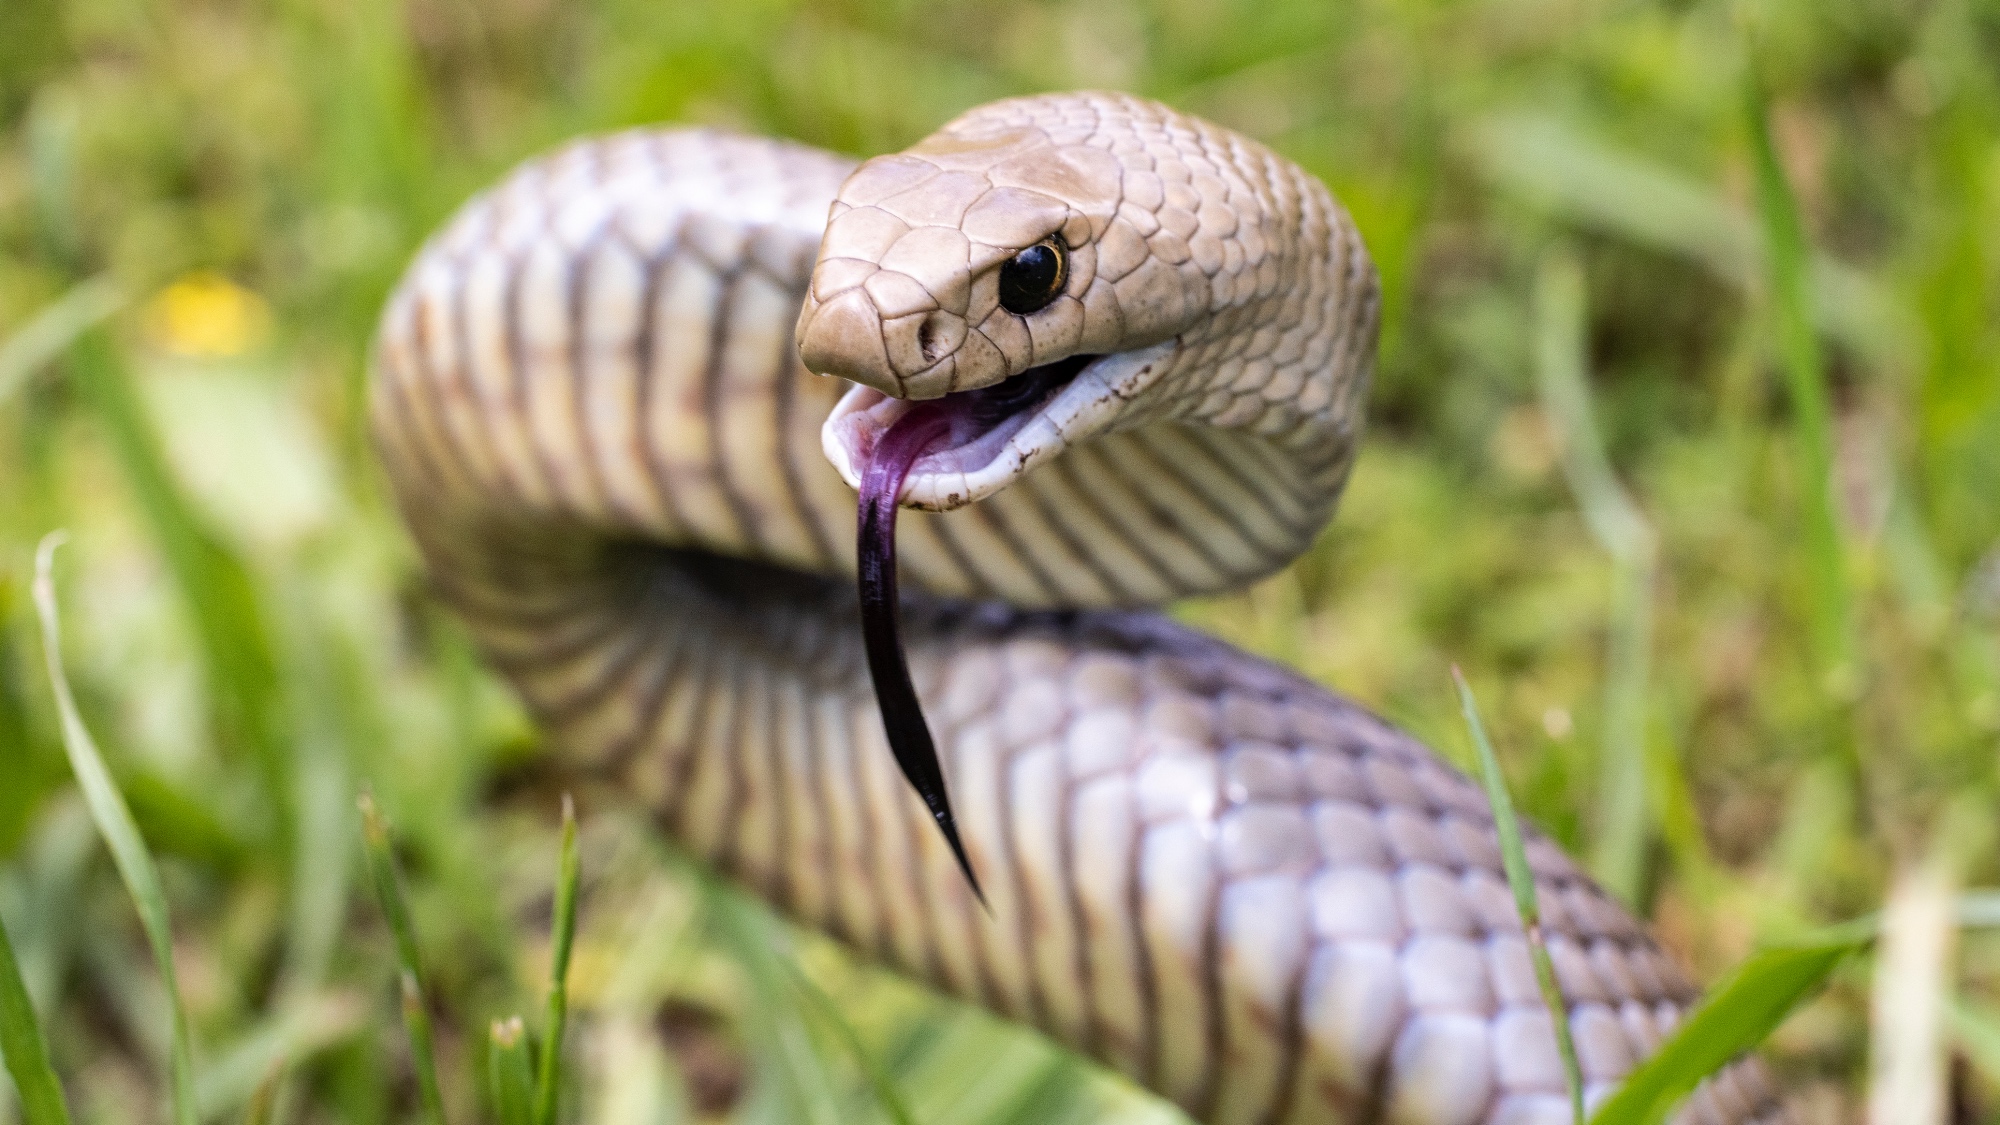 Eastern Brown snake highly venomous 